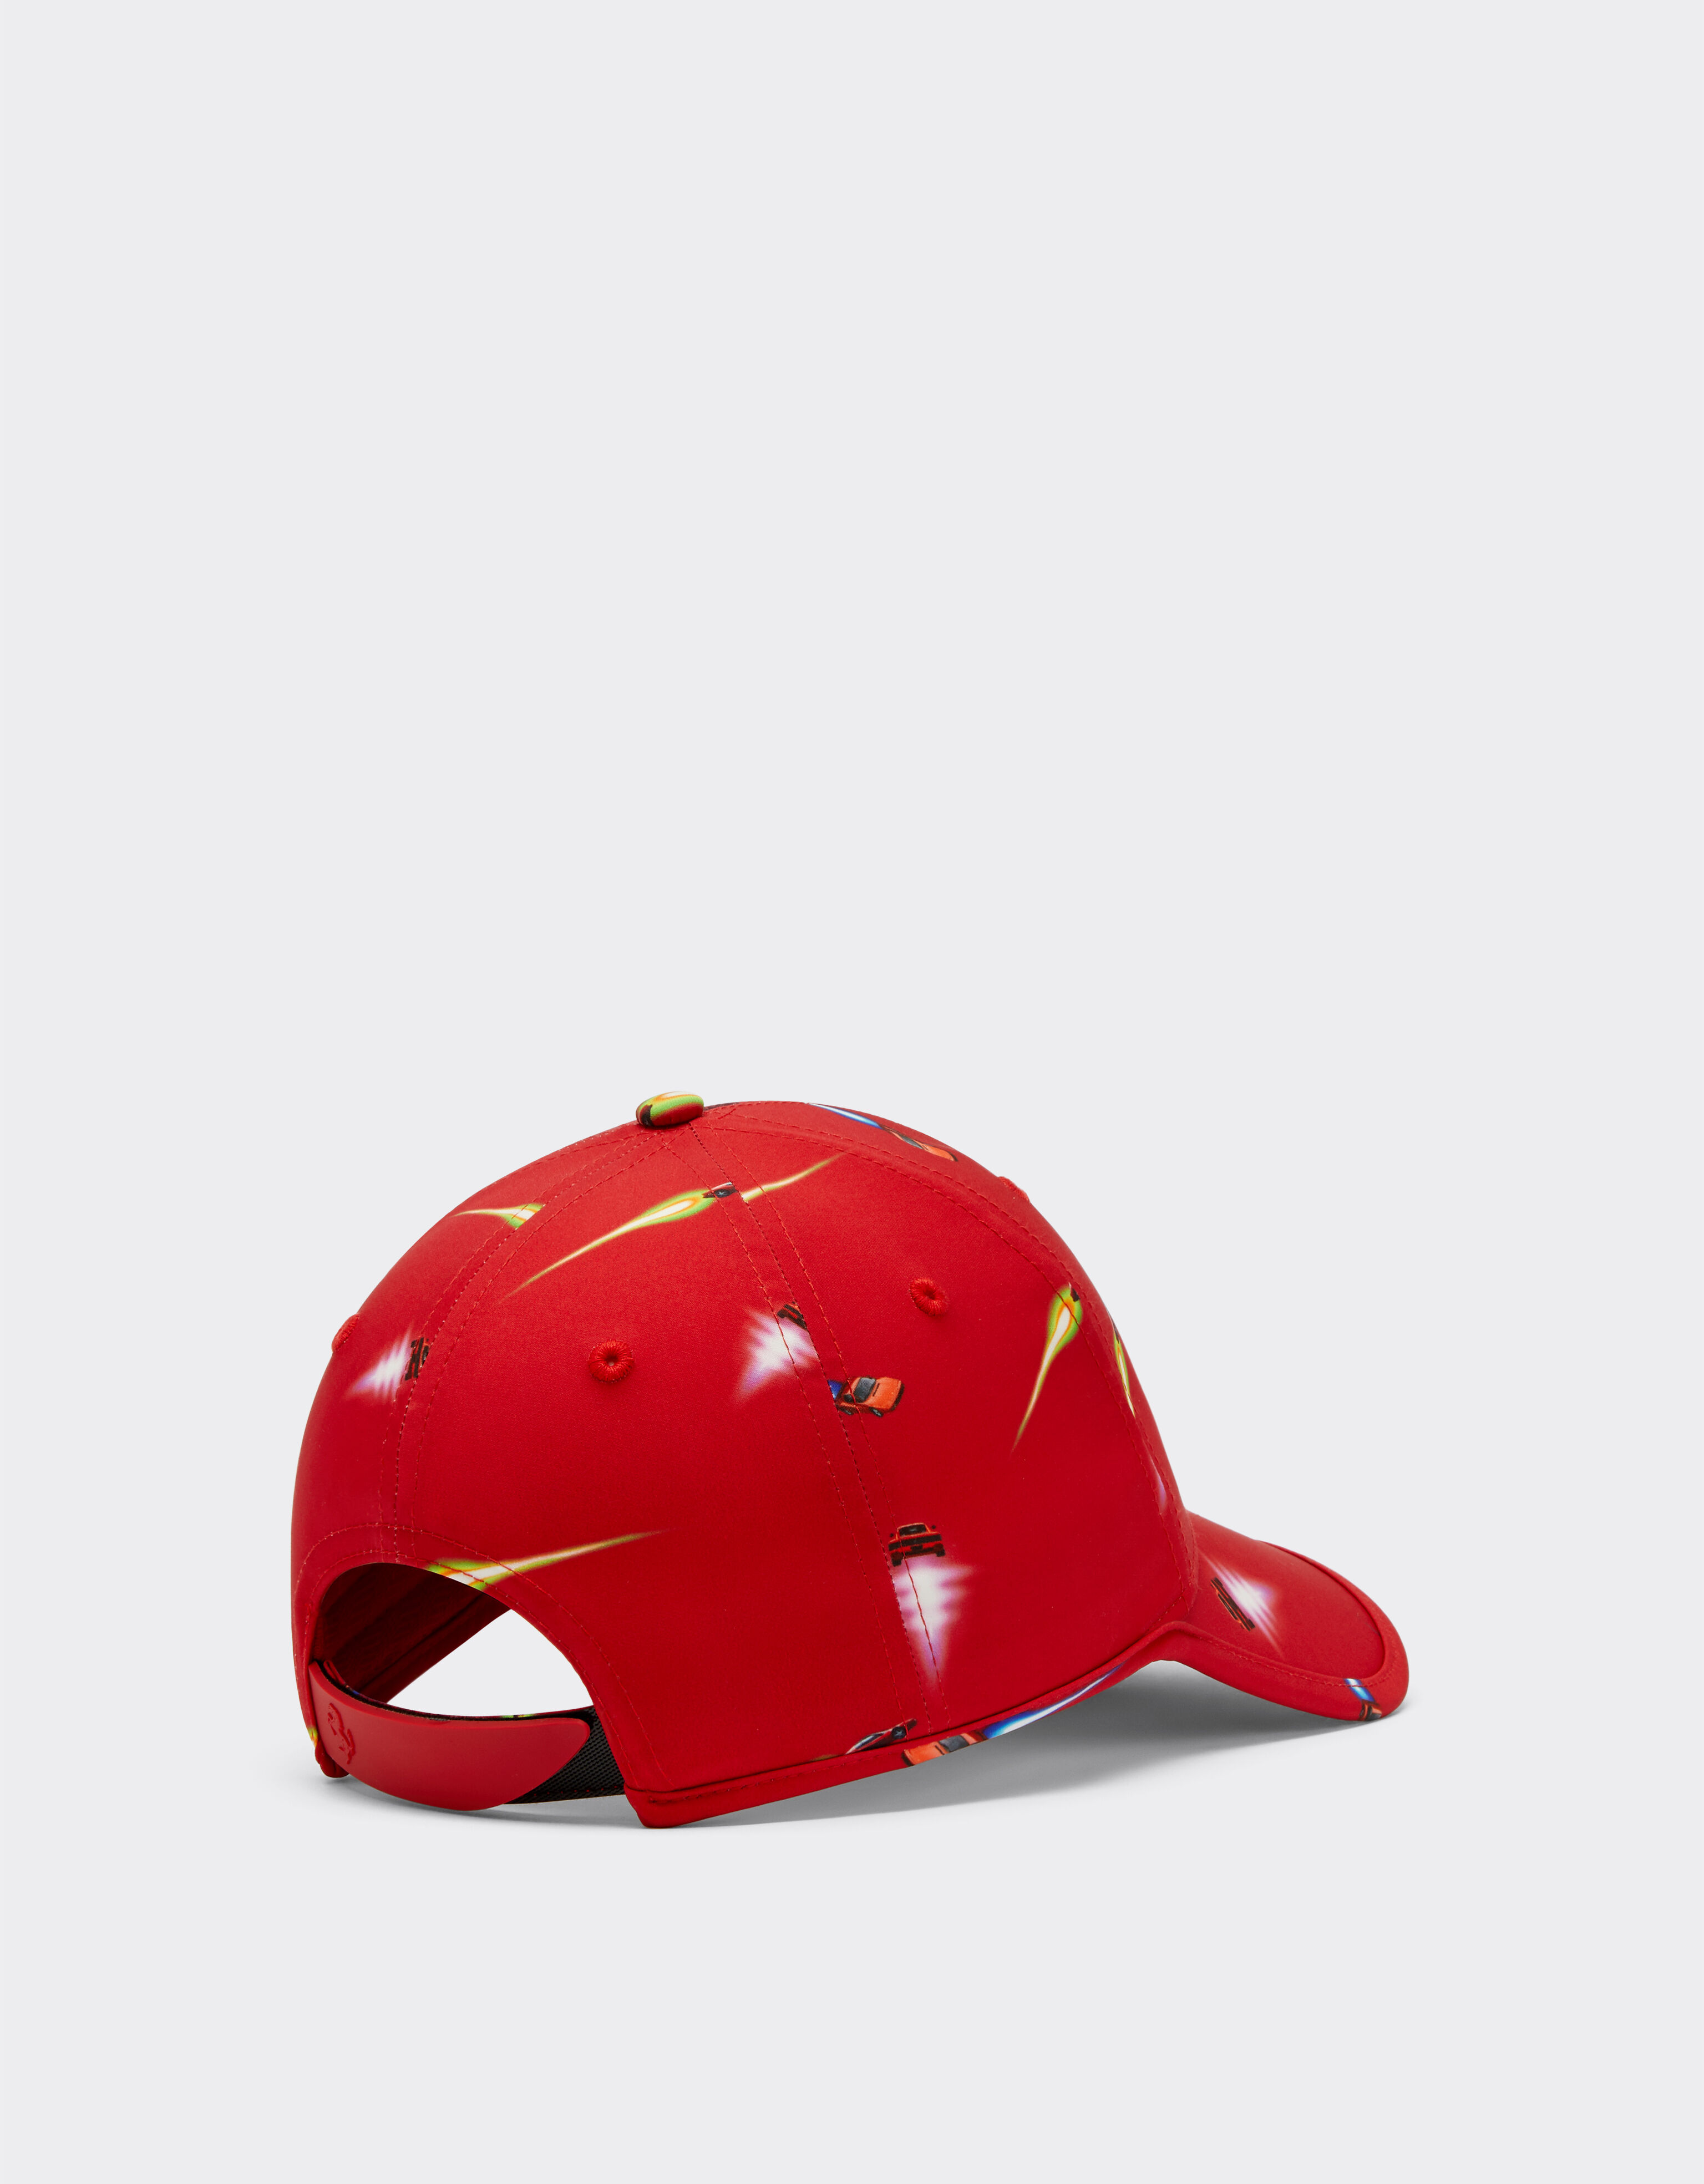 Ferrari Hat with Ferrari Cars print Rosso Corsa 20418fK